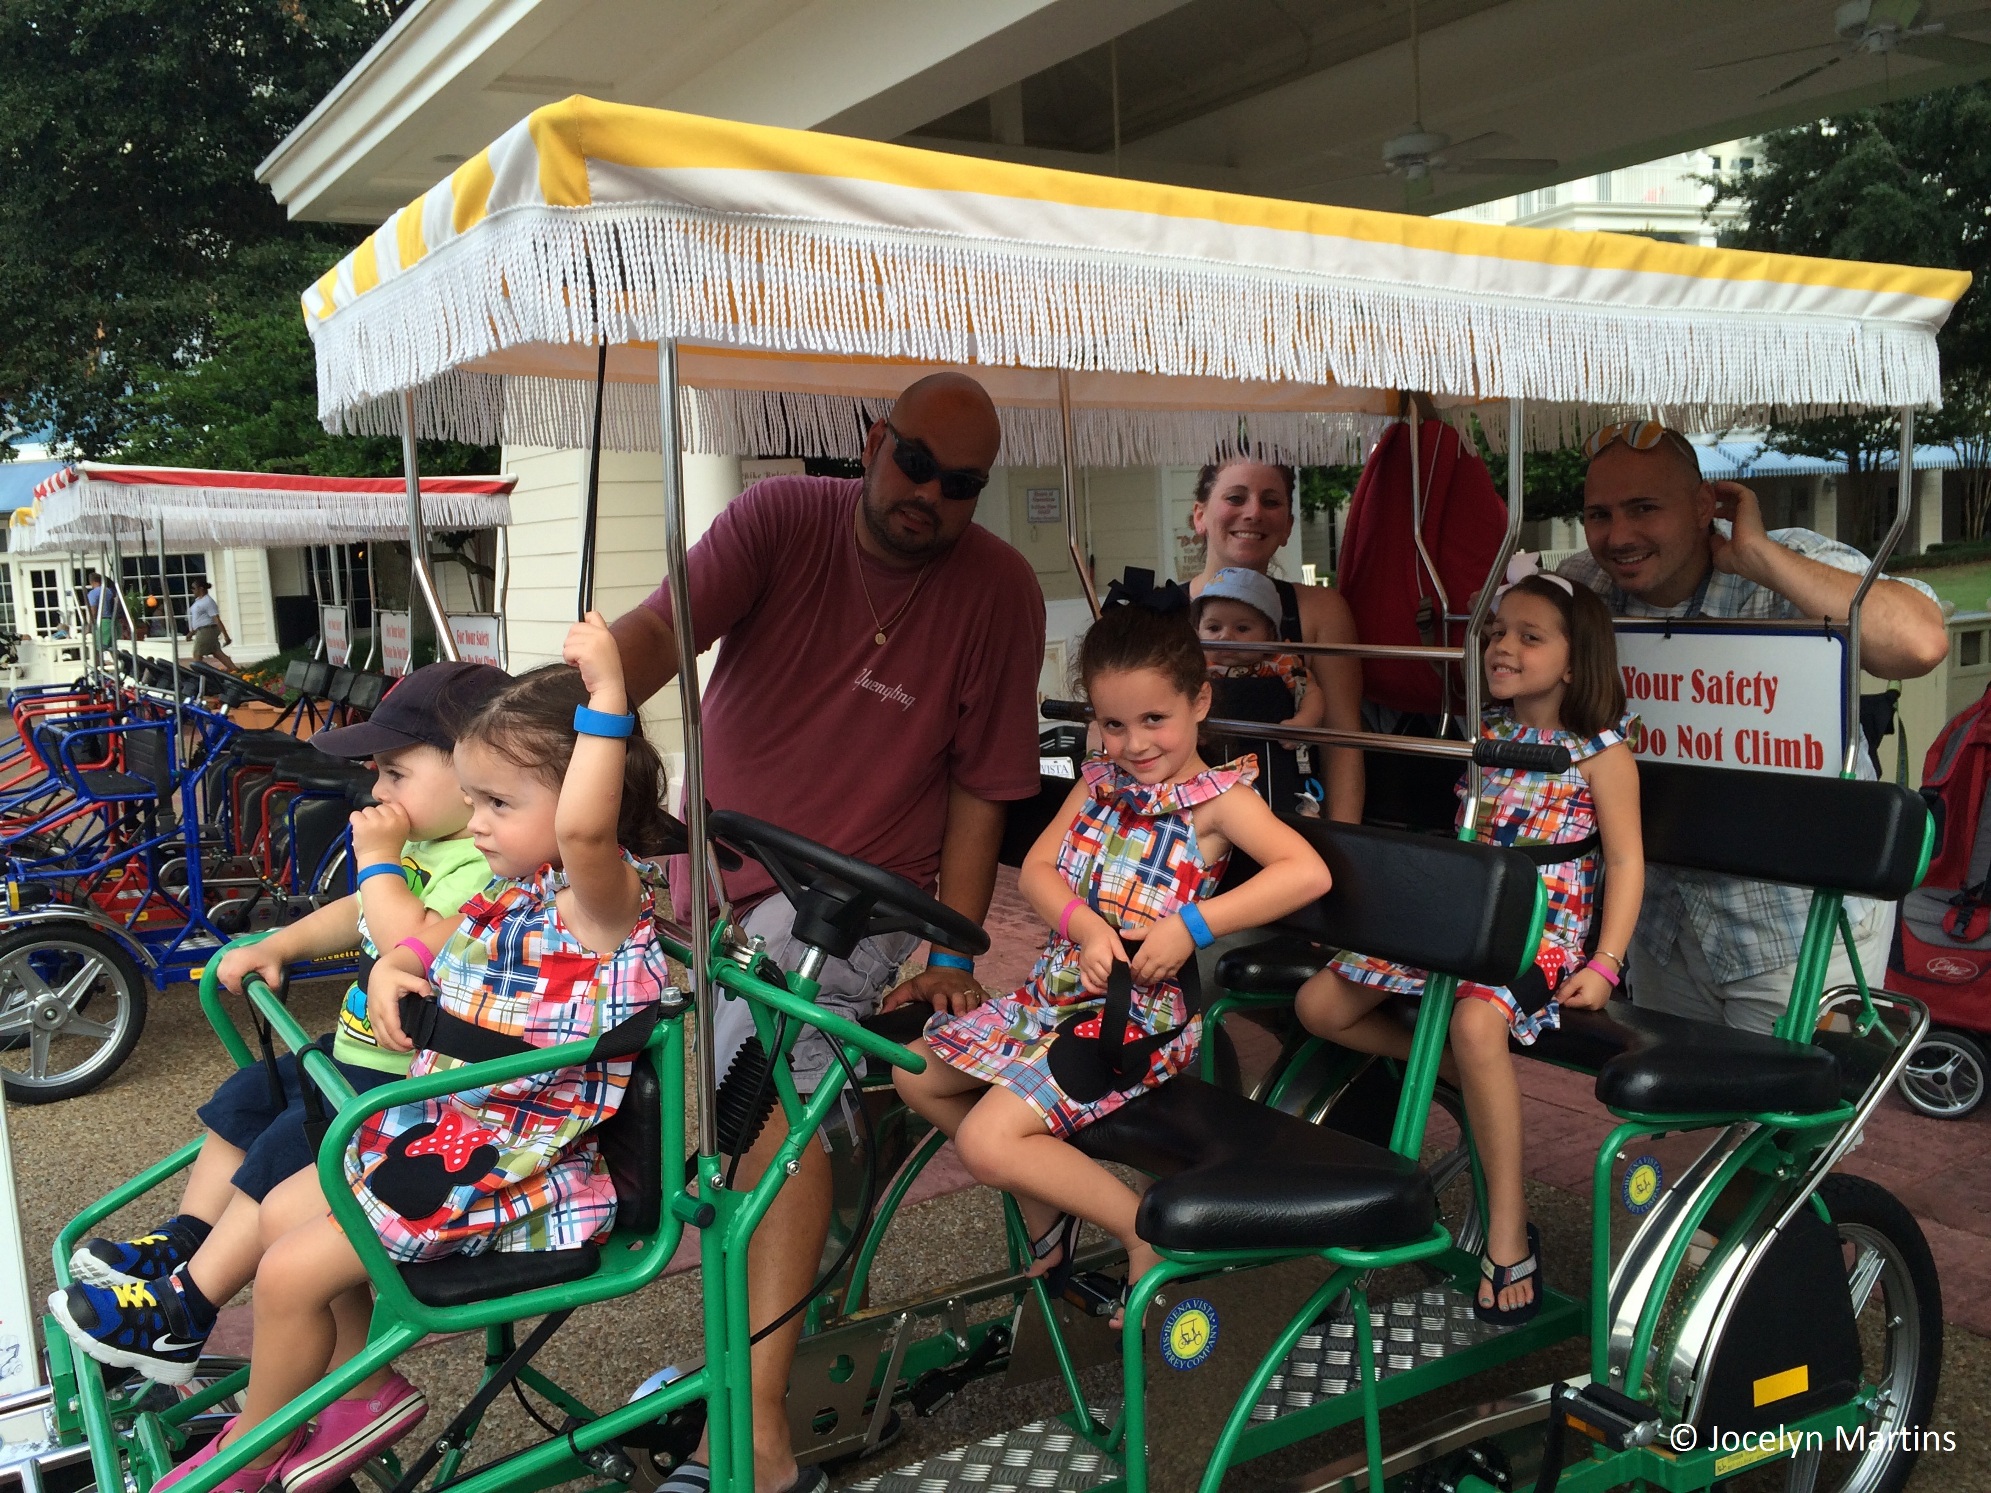 Rent a surrey bike at Disney's Boardwalk for old fashioned fun | PassPorter.com